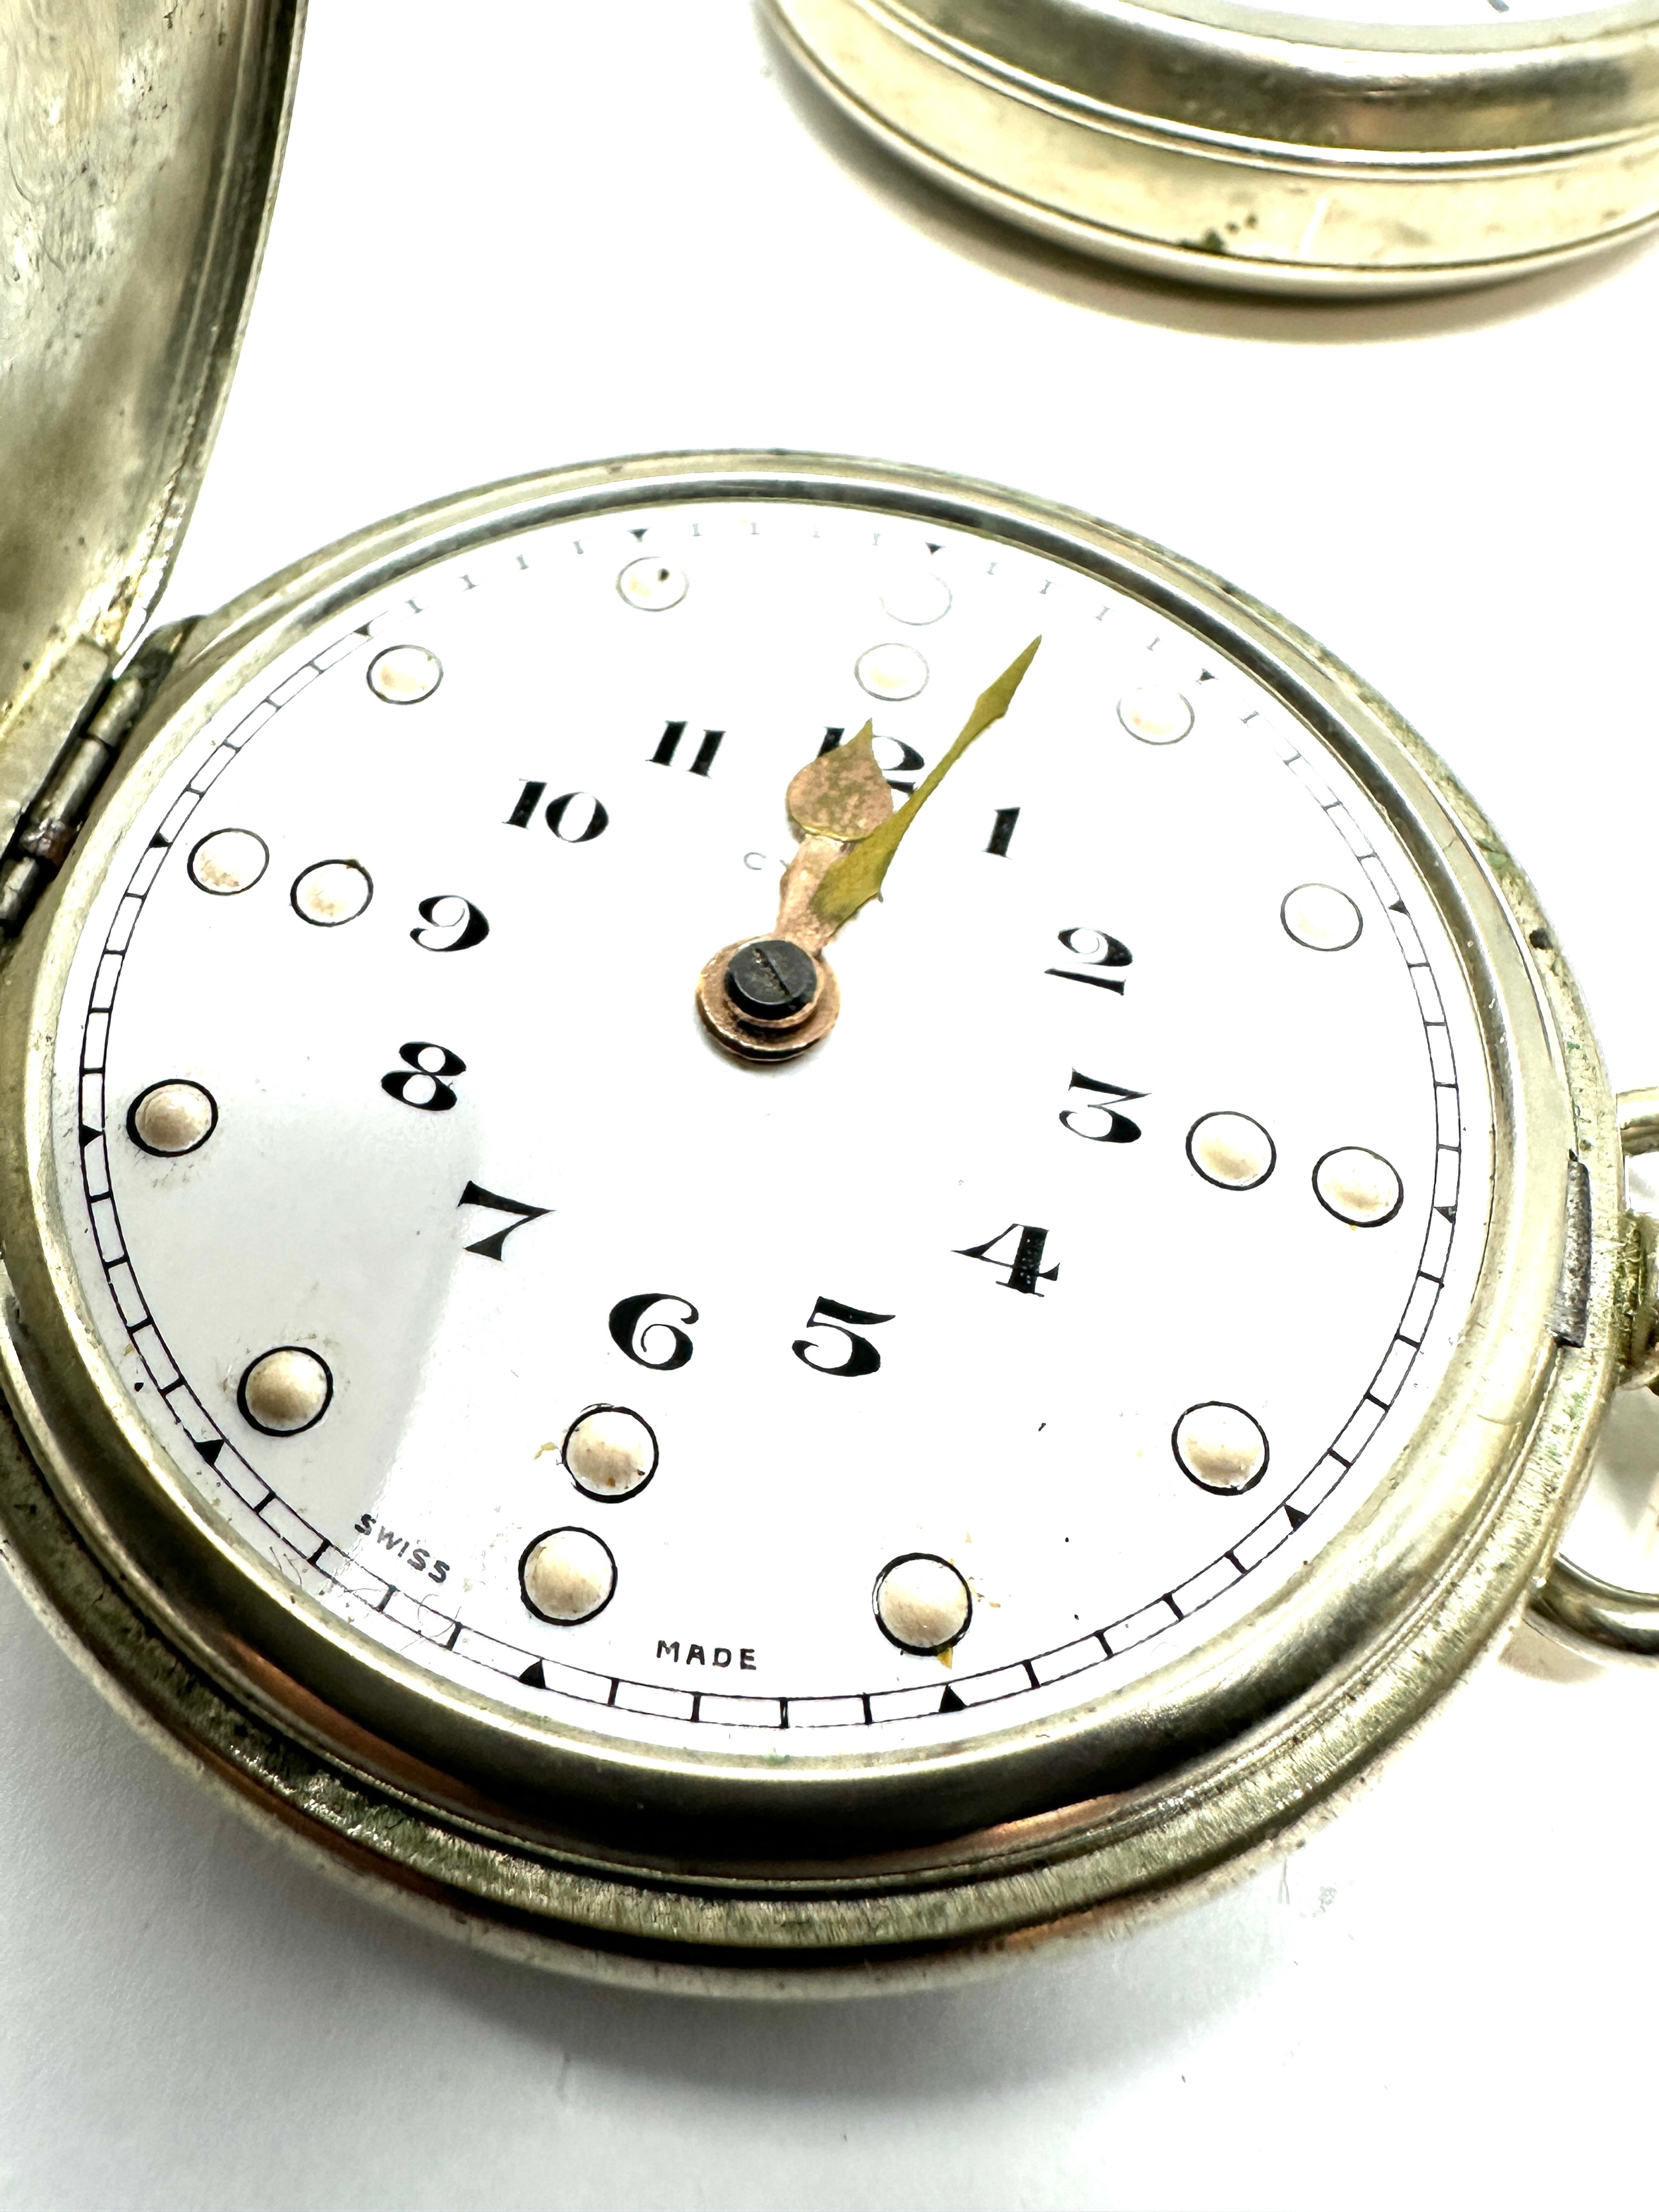 4 Vintage pocket watches cyma brialle & roskopfe etc spares or repair - Image 6 of 6